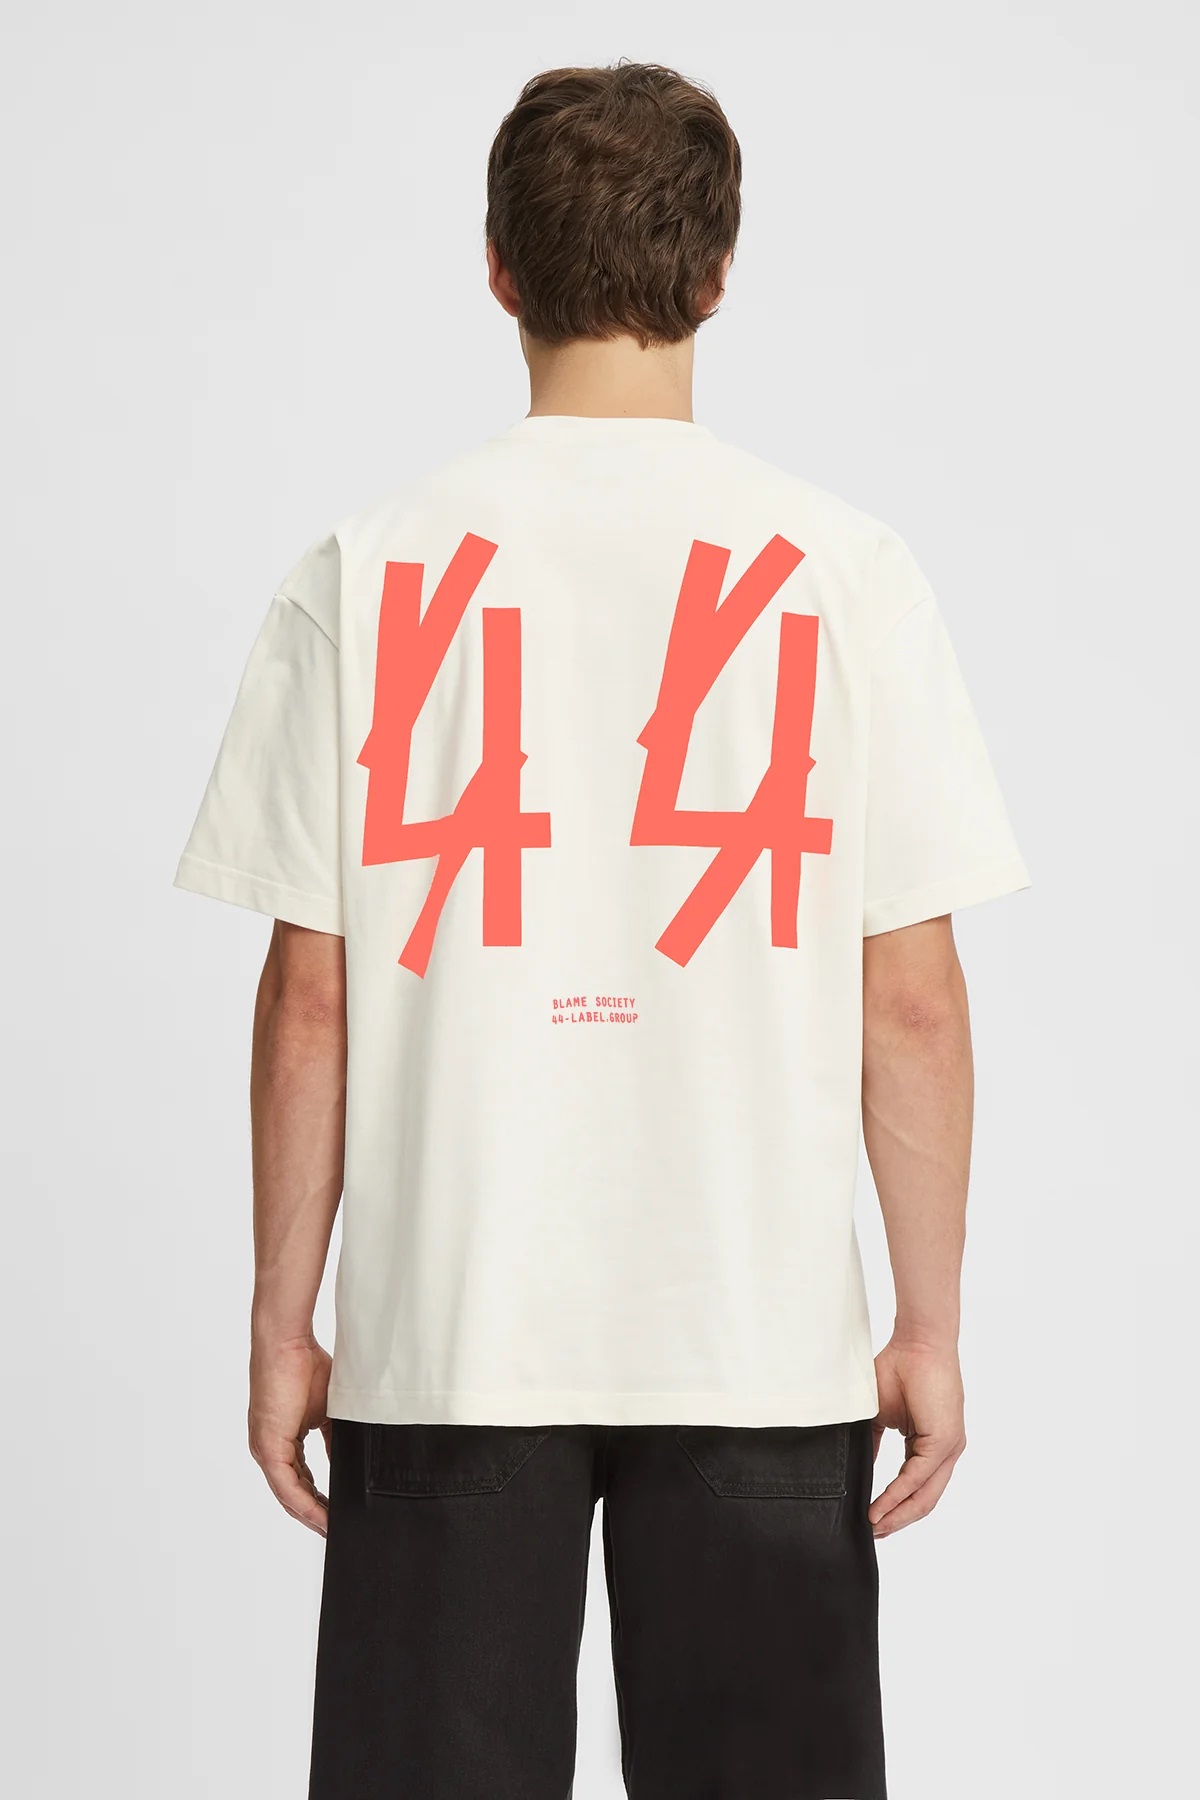 44 LABEL GROUP Original T-Shirt in Bones/Neon Print 3XL